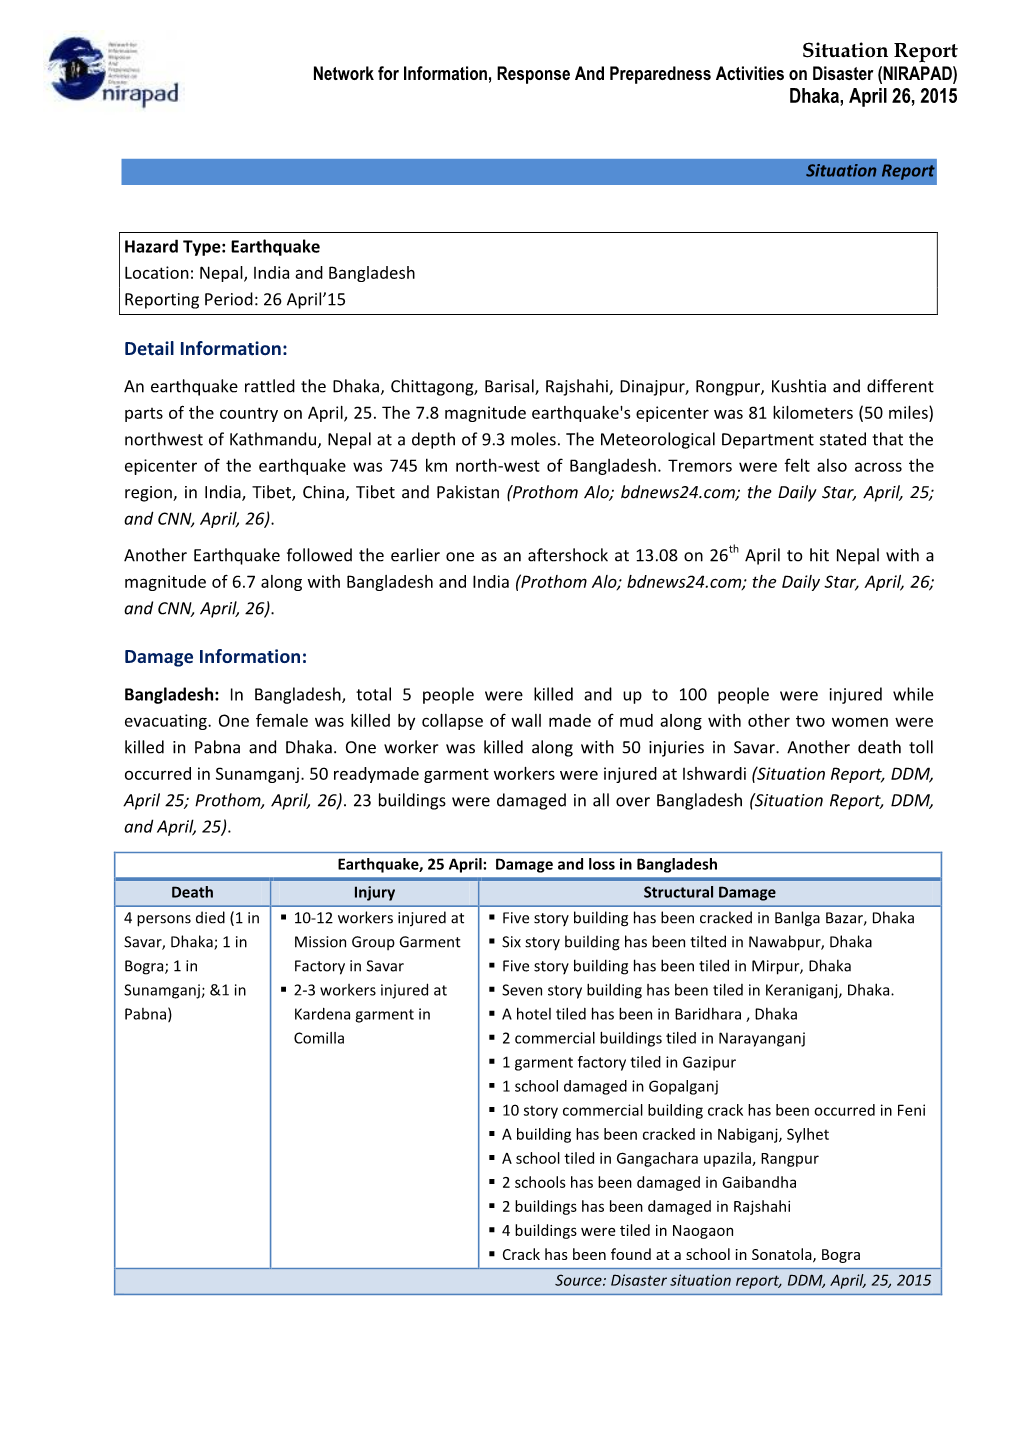 Situation Report Dhaka, April 26, 2015 Detail Information